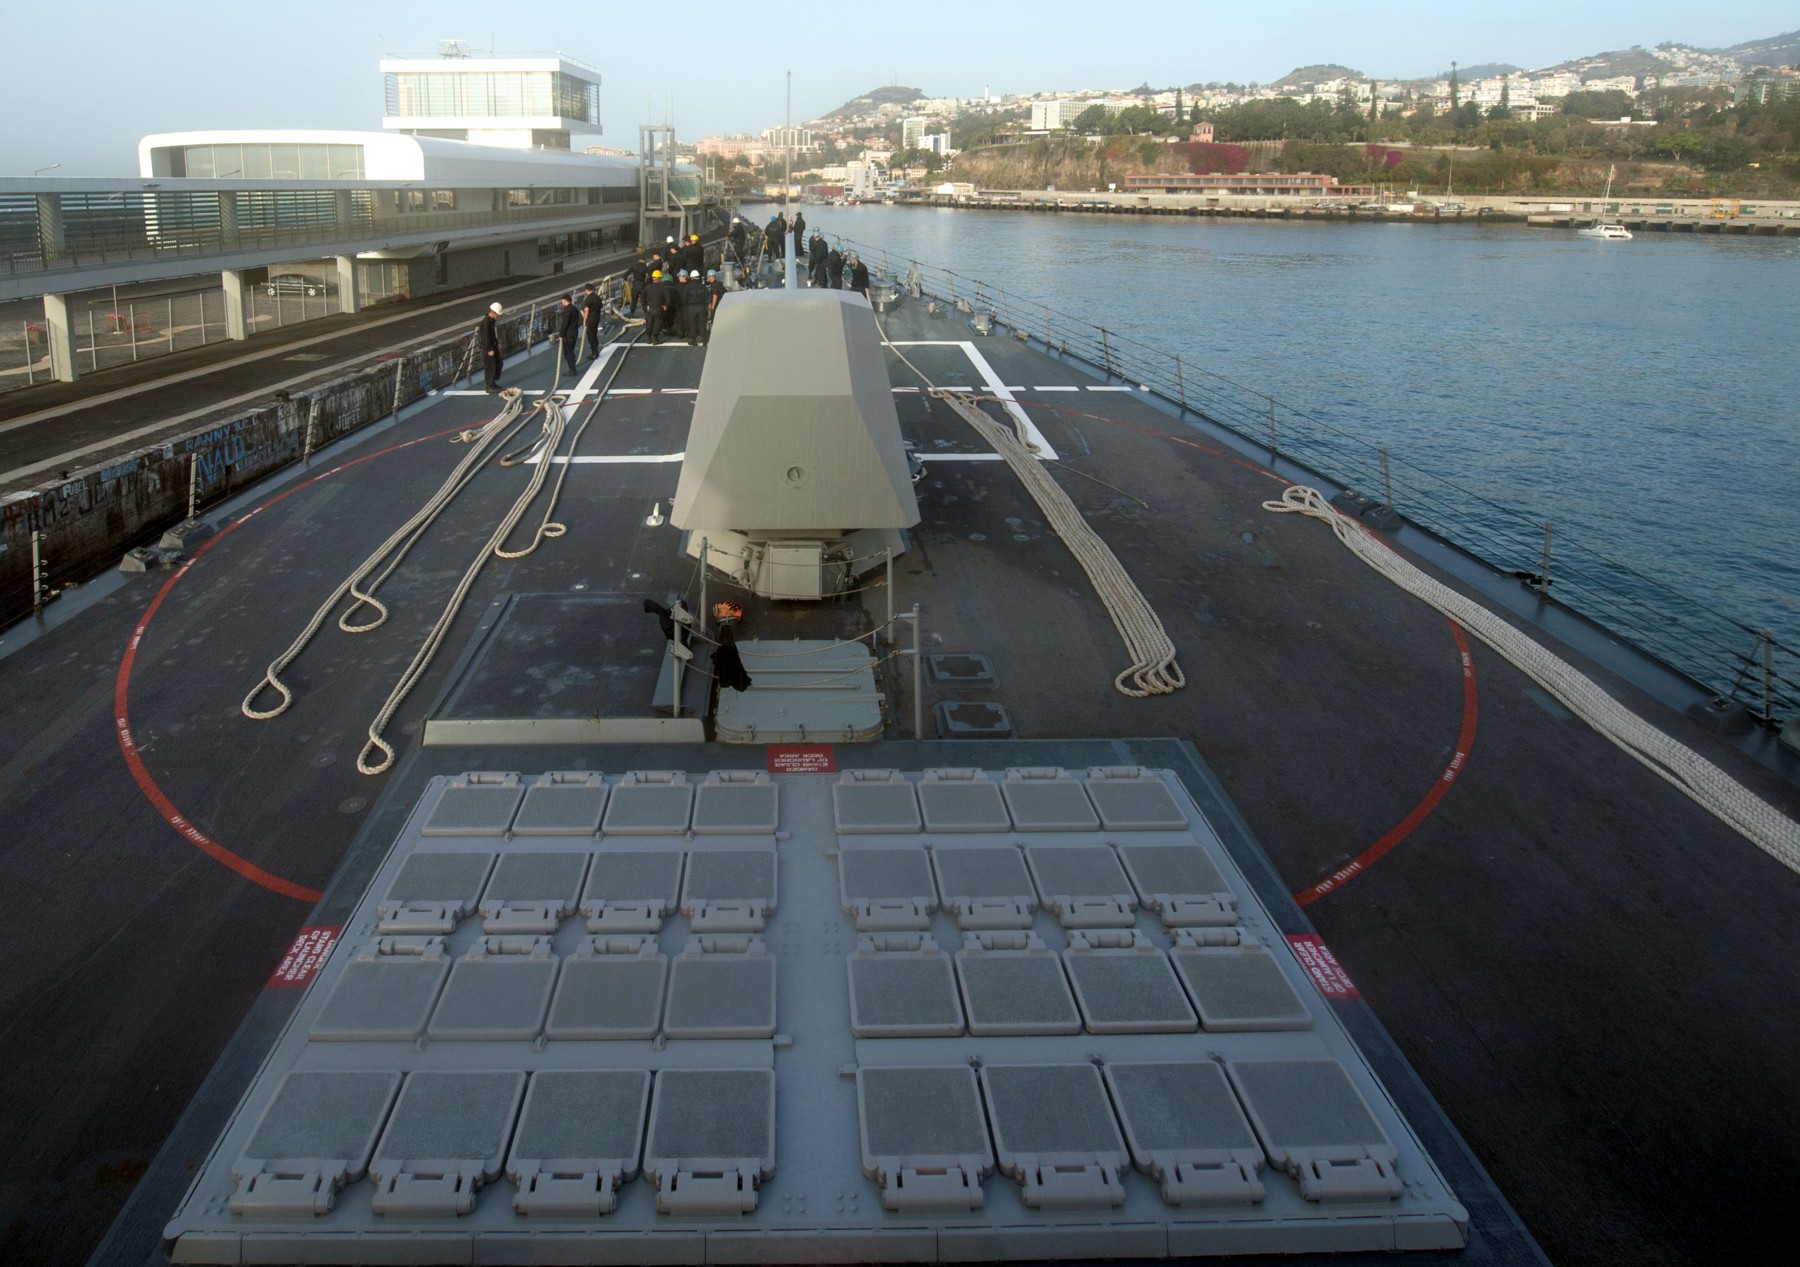 ddg-109 uss jason dunham arleigh burke class guided missile destroyer aegis us navy funchal portugal 25p